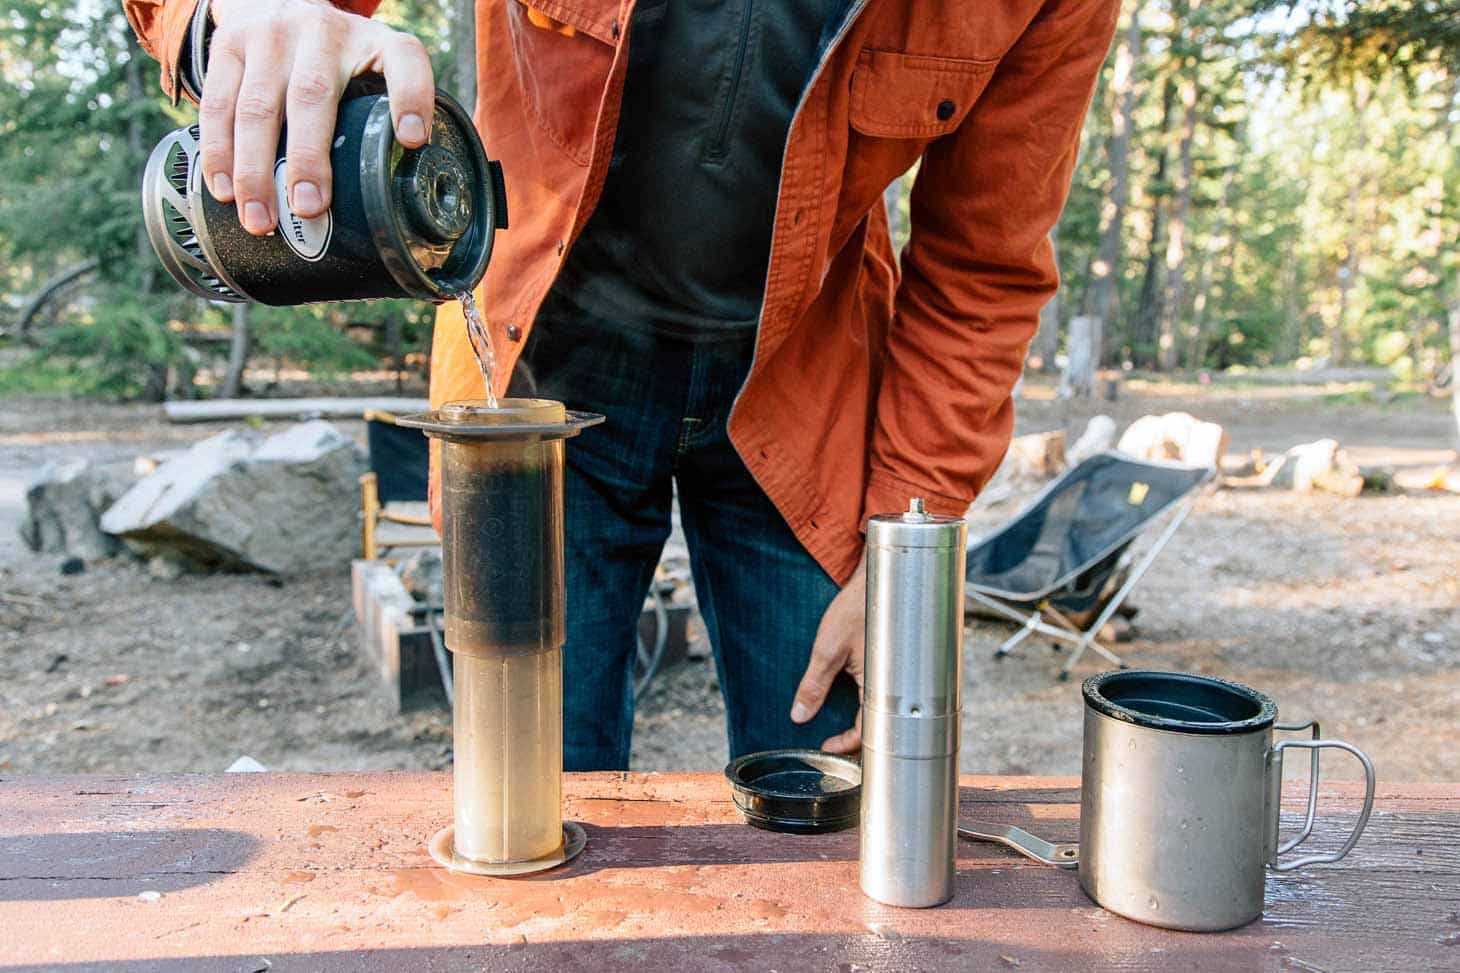 Michael making coffee using an arrow press